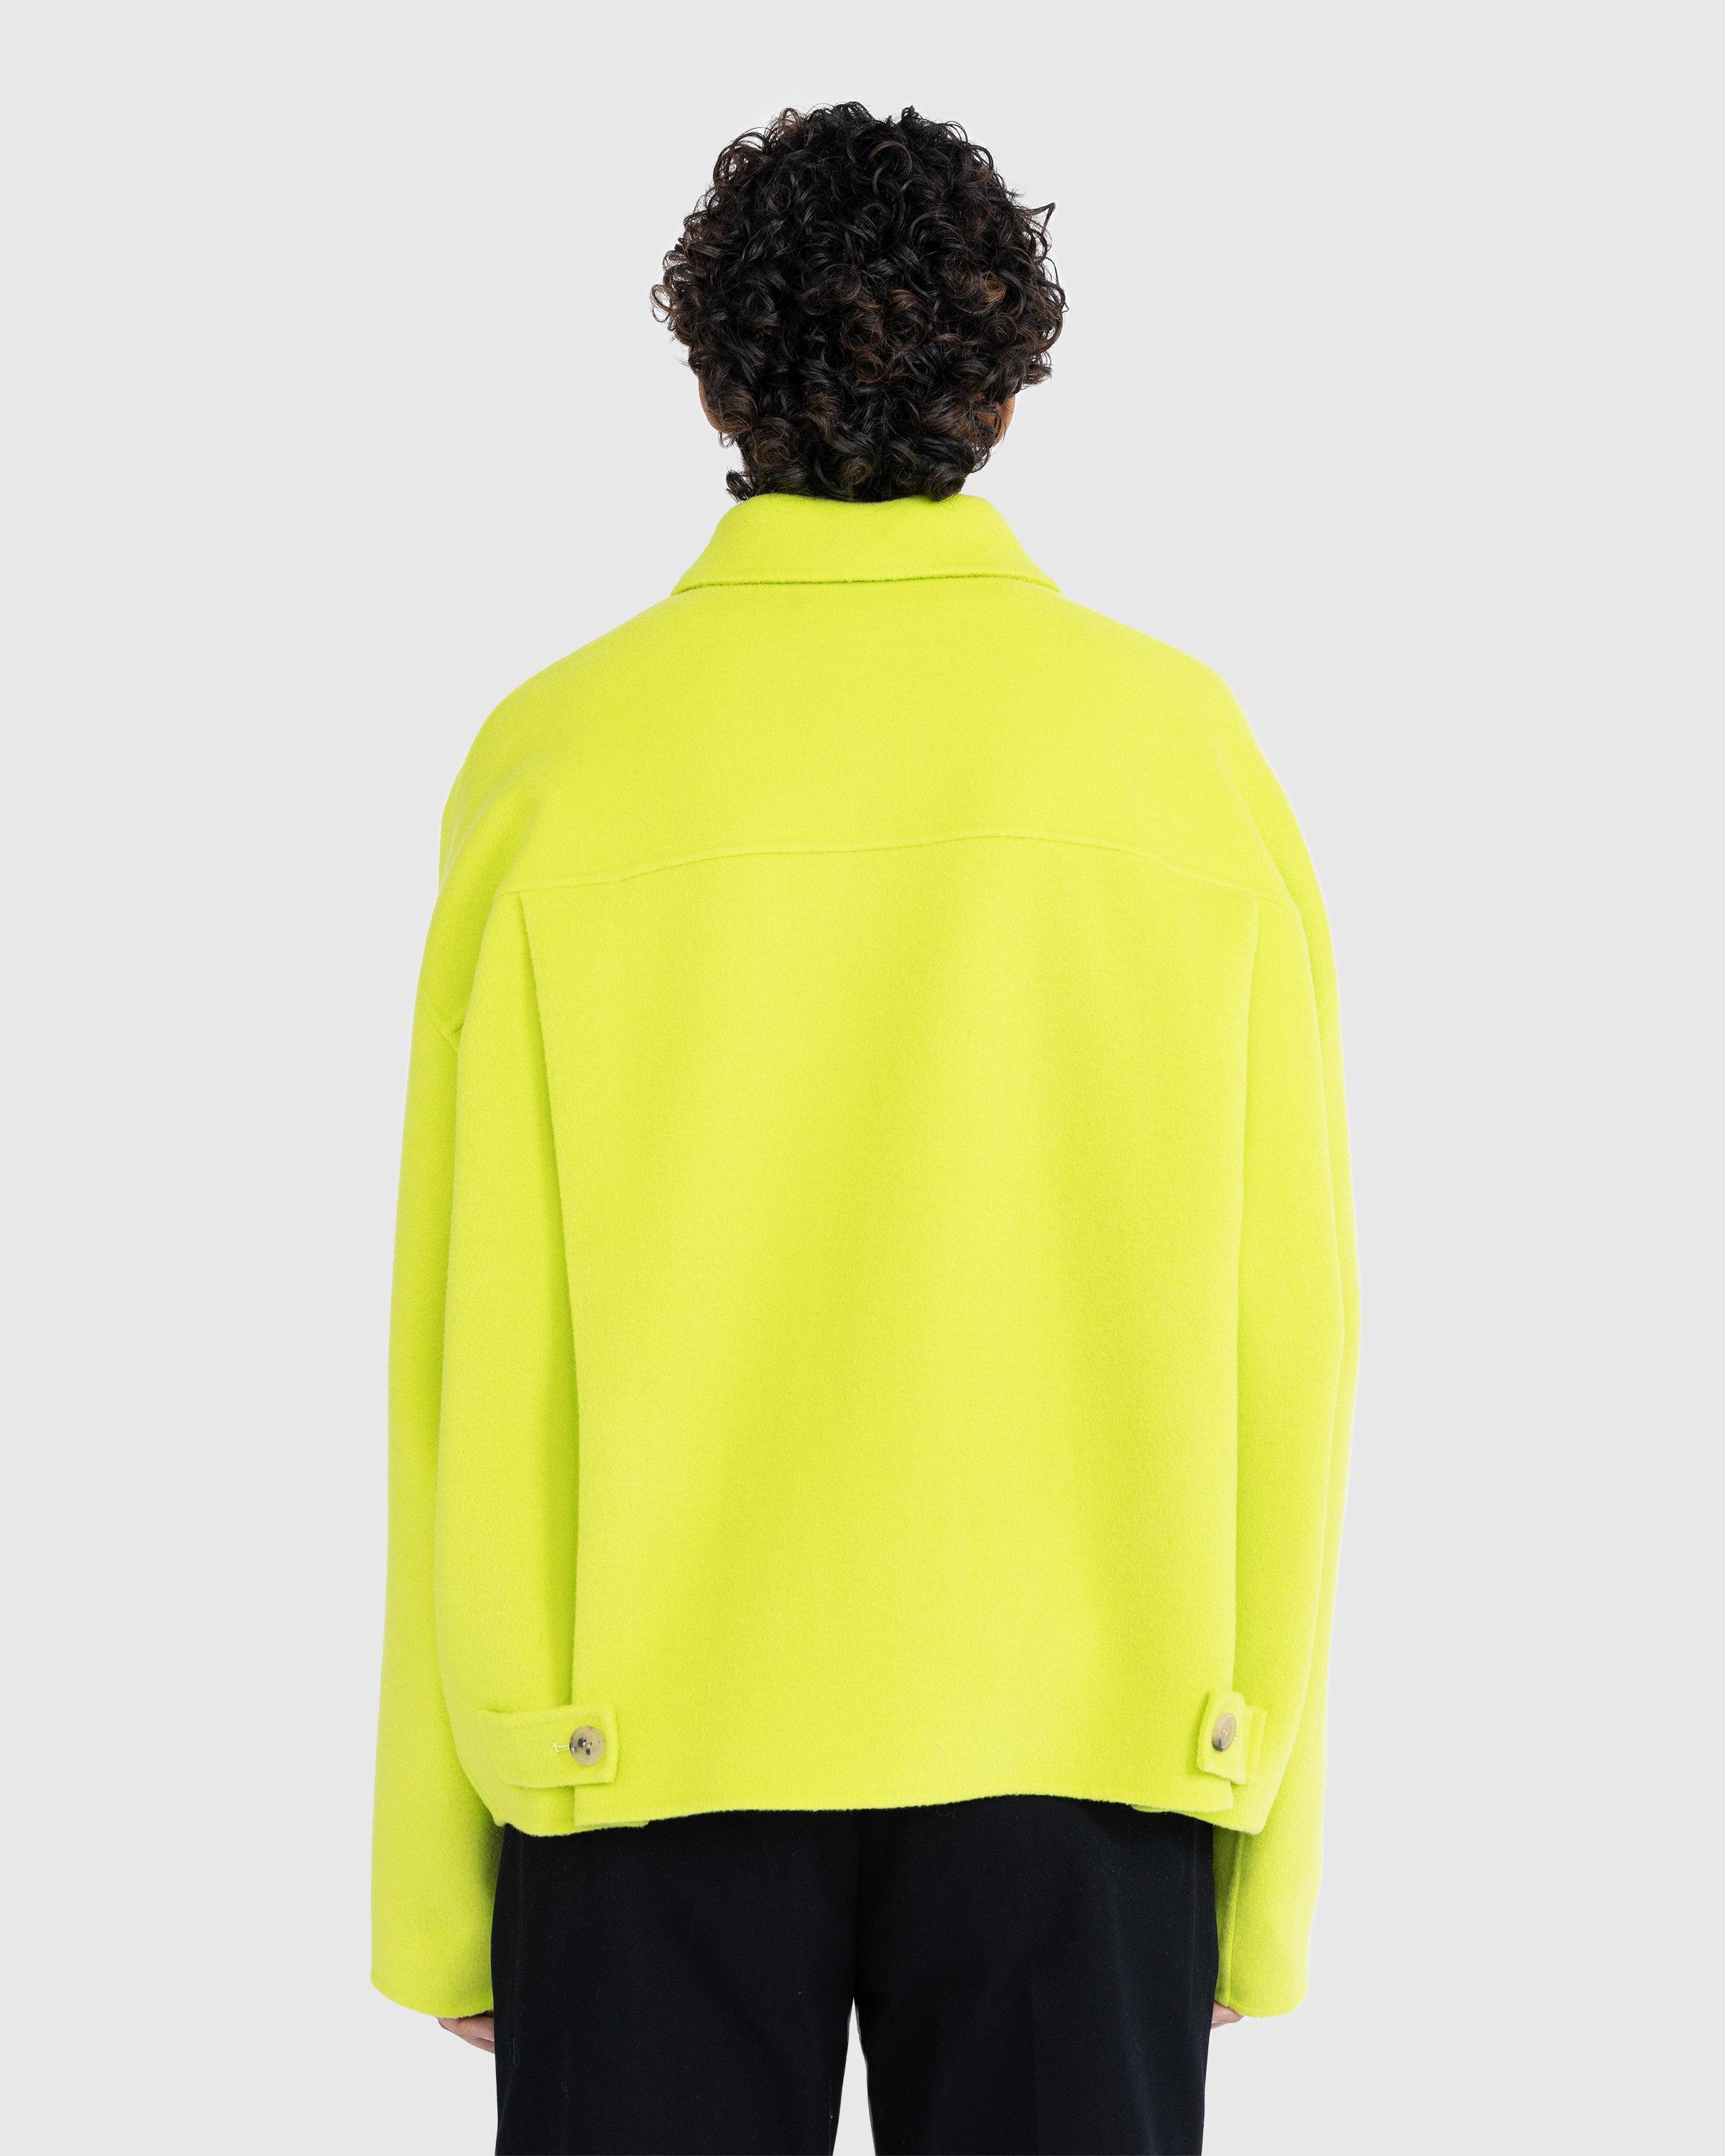 Acne Studios - Wool Zipper Jacket Lime Green - Clothing - Green - Image 5